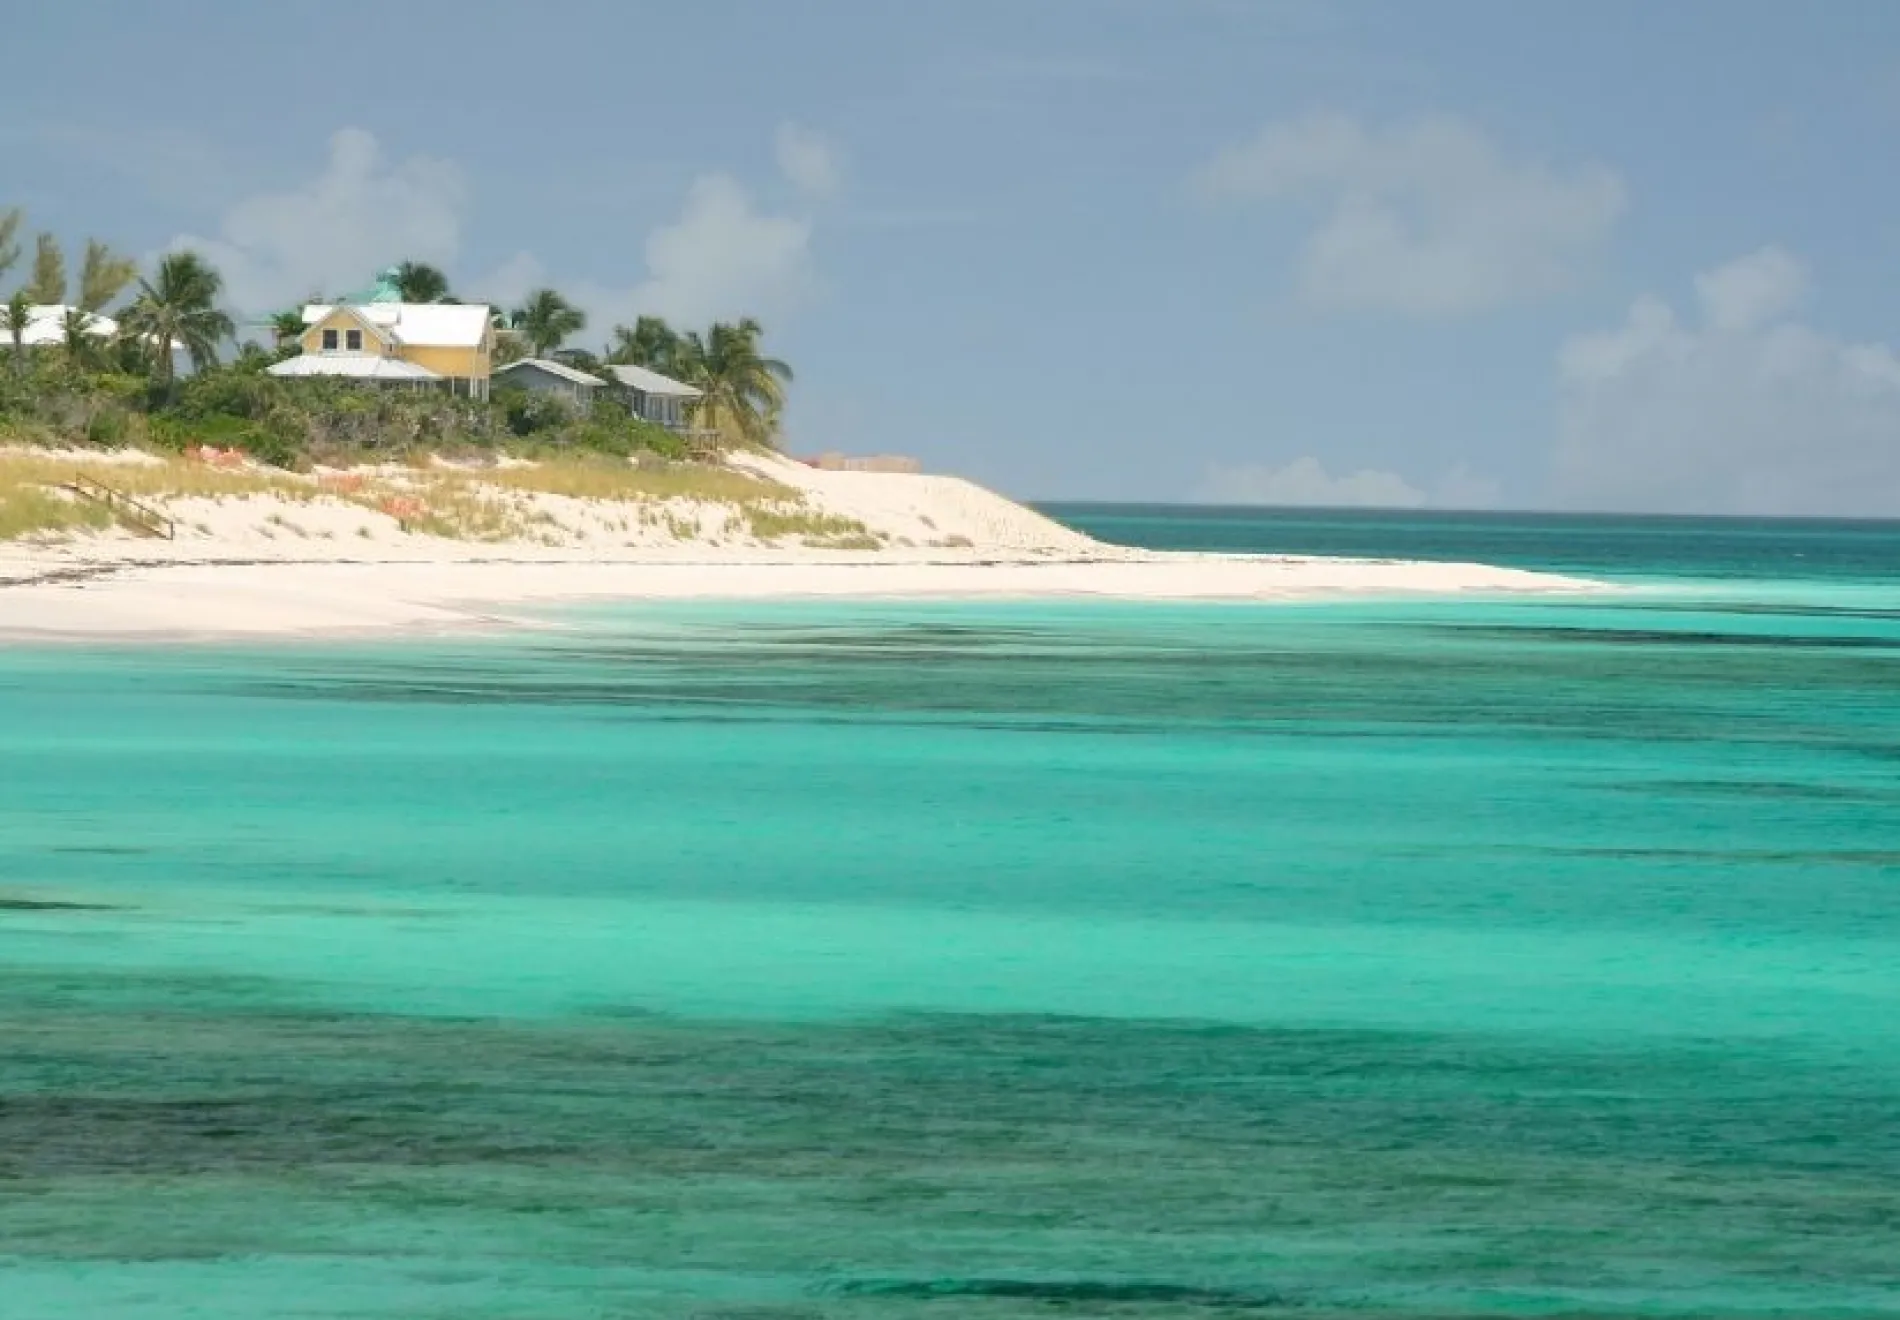 Bimini island